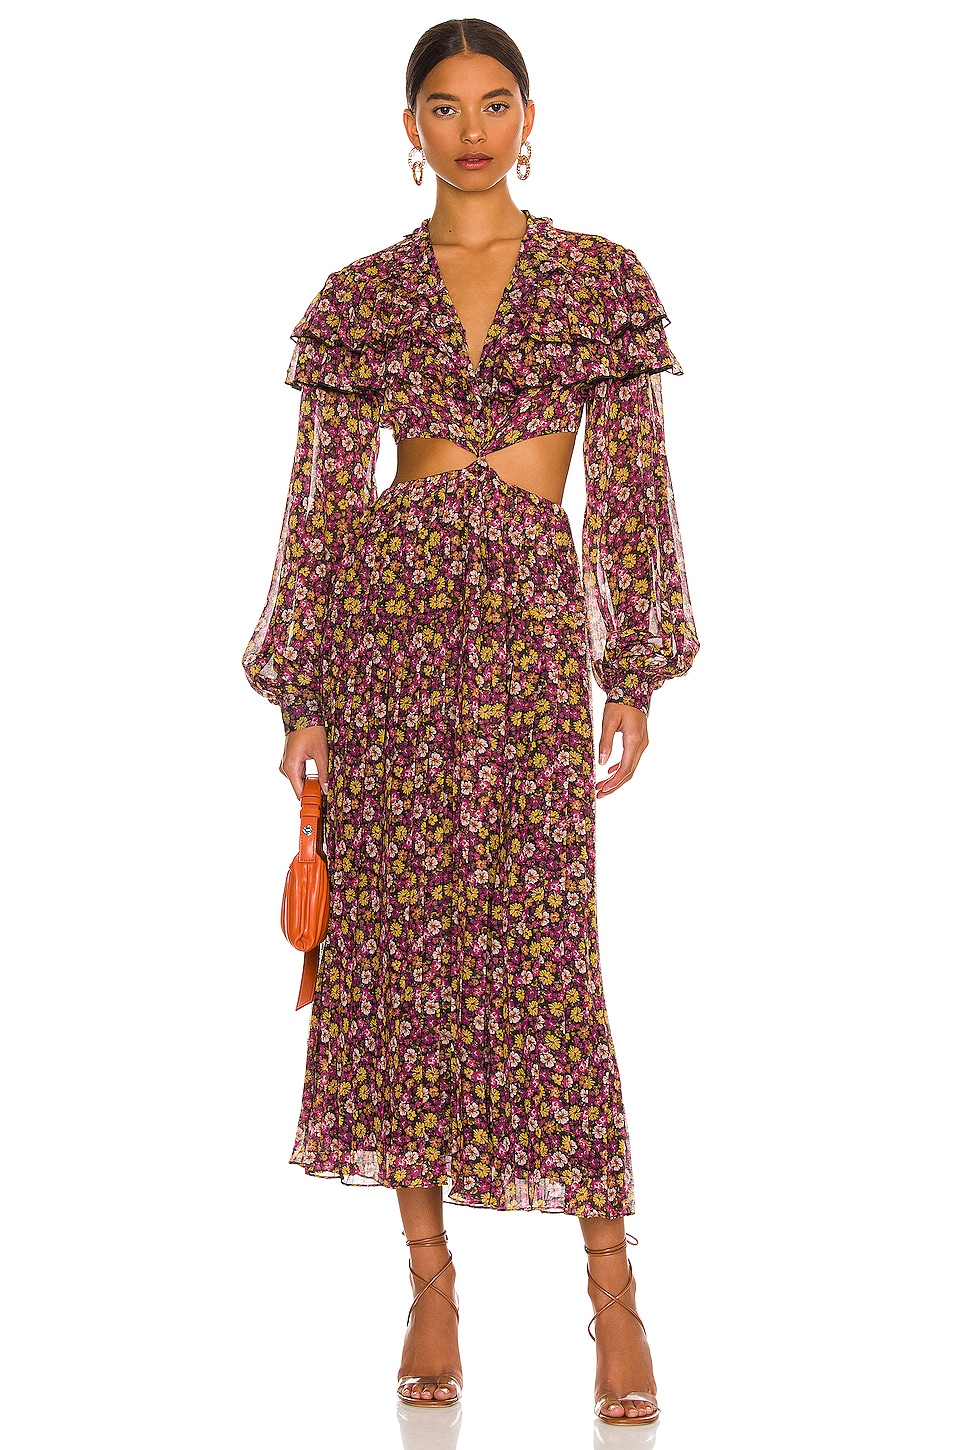 Ronny Kobo Hedy Dress in Rhubarb & Orchid Multi | REVOLVE